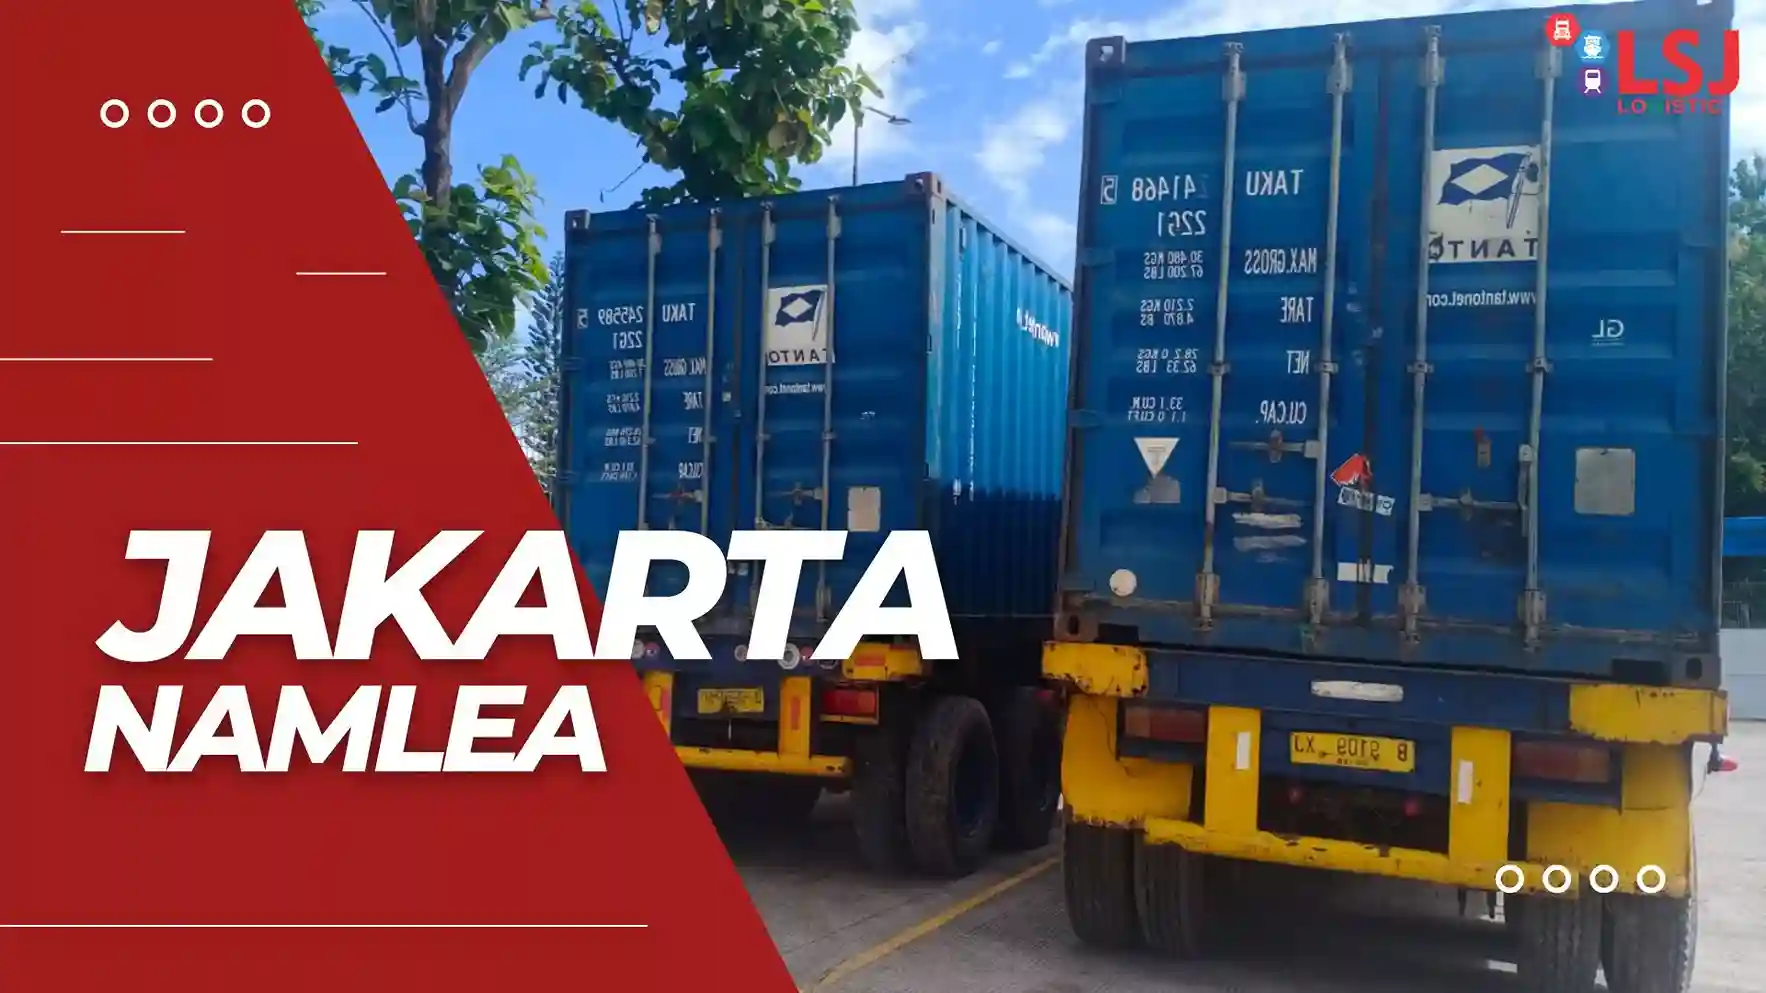 Tarif Pengiriman Container Jakarta Namlea